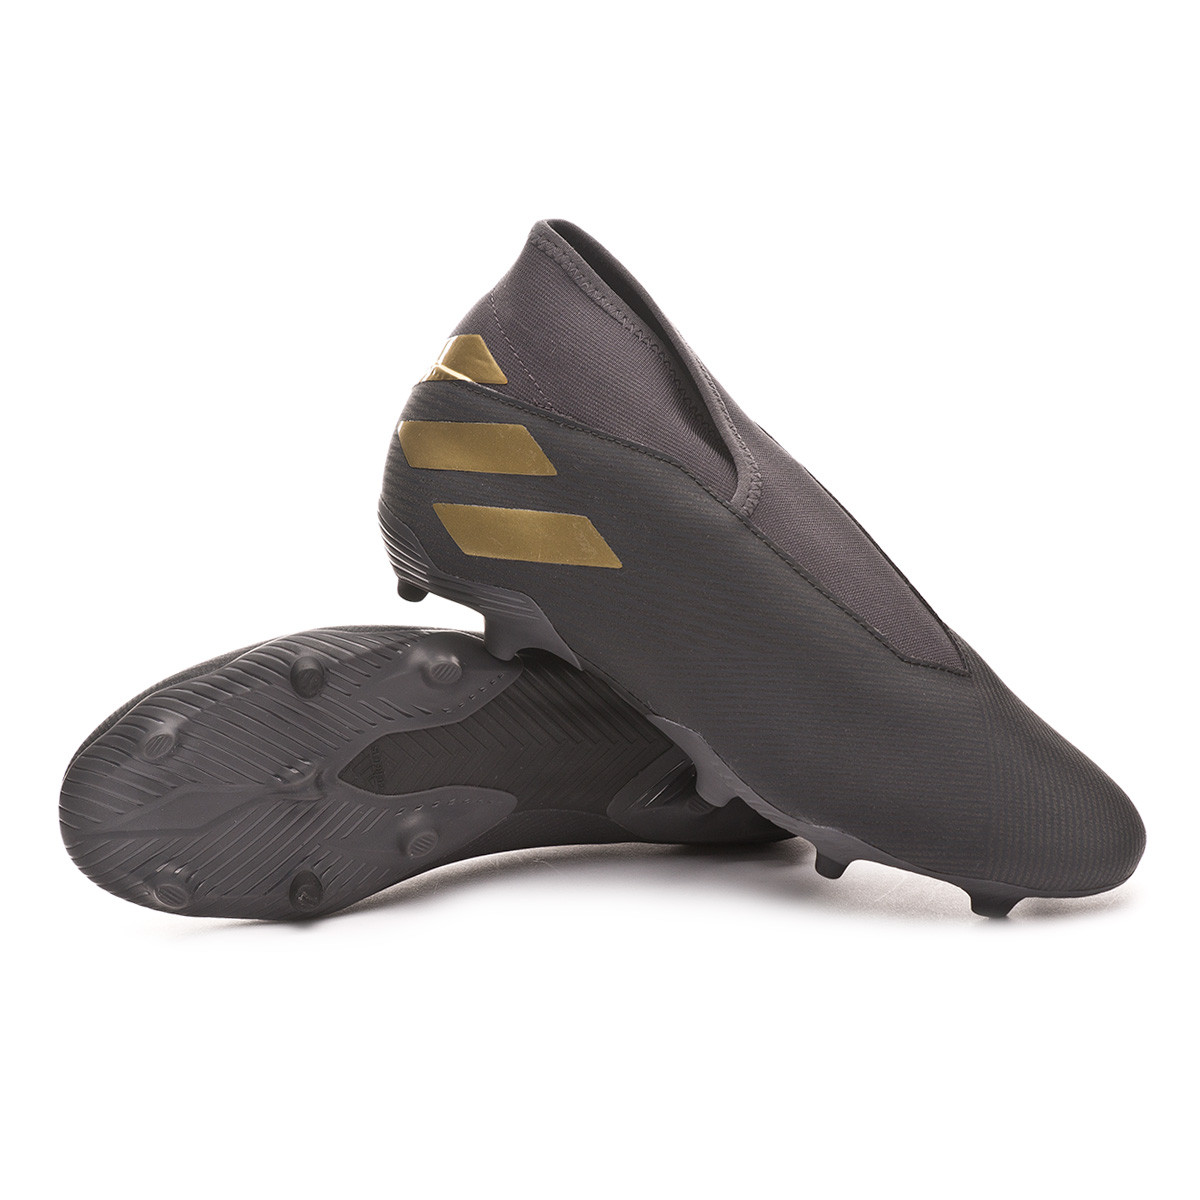 Chaussure de foot adidas Nemeziz 19.3 LL FG Core black-Gold  metallic-Utility black - Boutique de football Fútbol Emotion